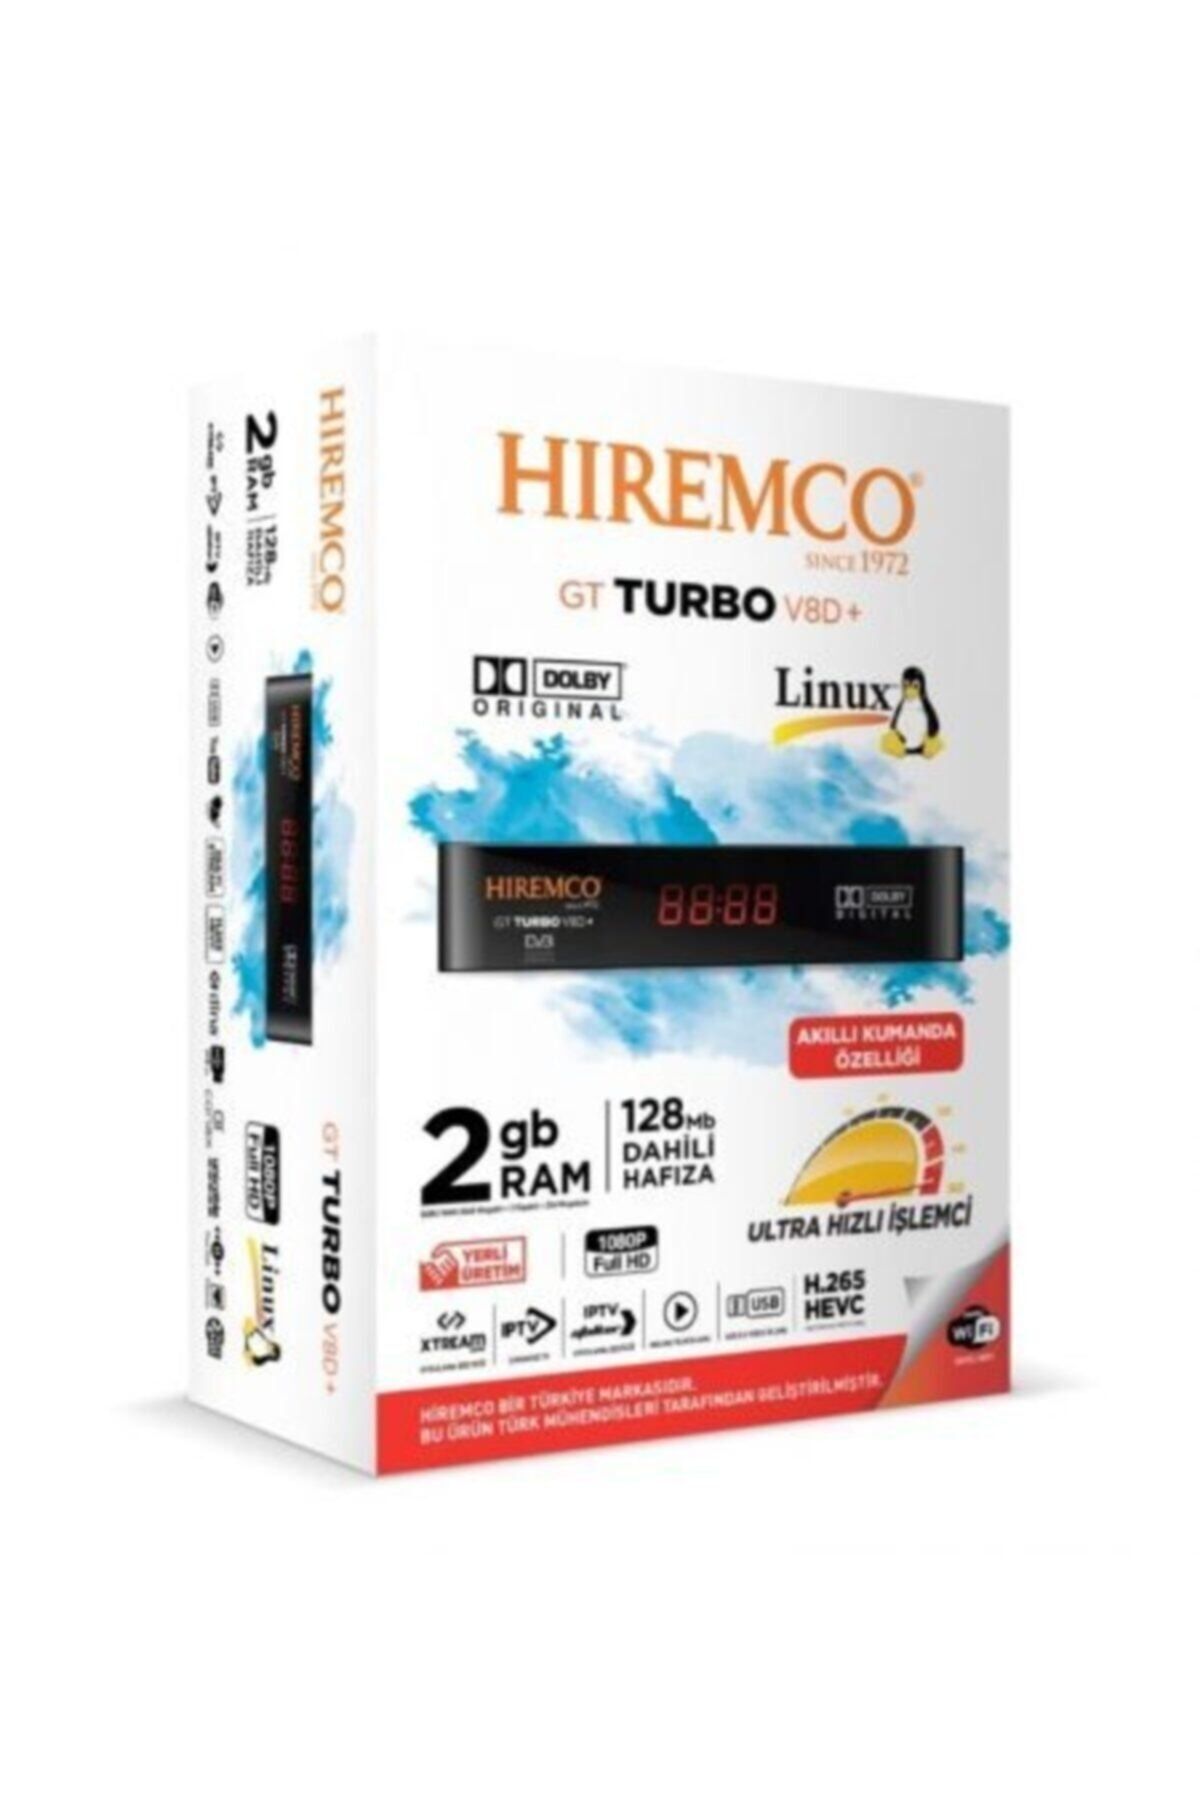 Hiremco Gt Turbo V8d+ Plus Dahili Wifili Iptv-linux Uydu Alıcısı